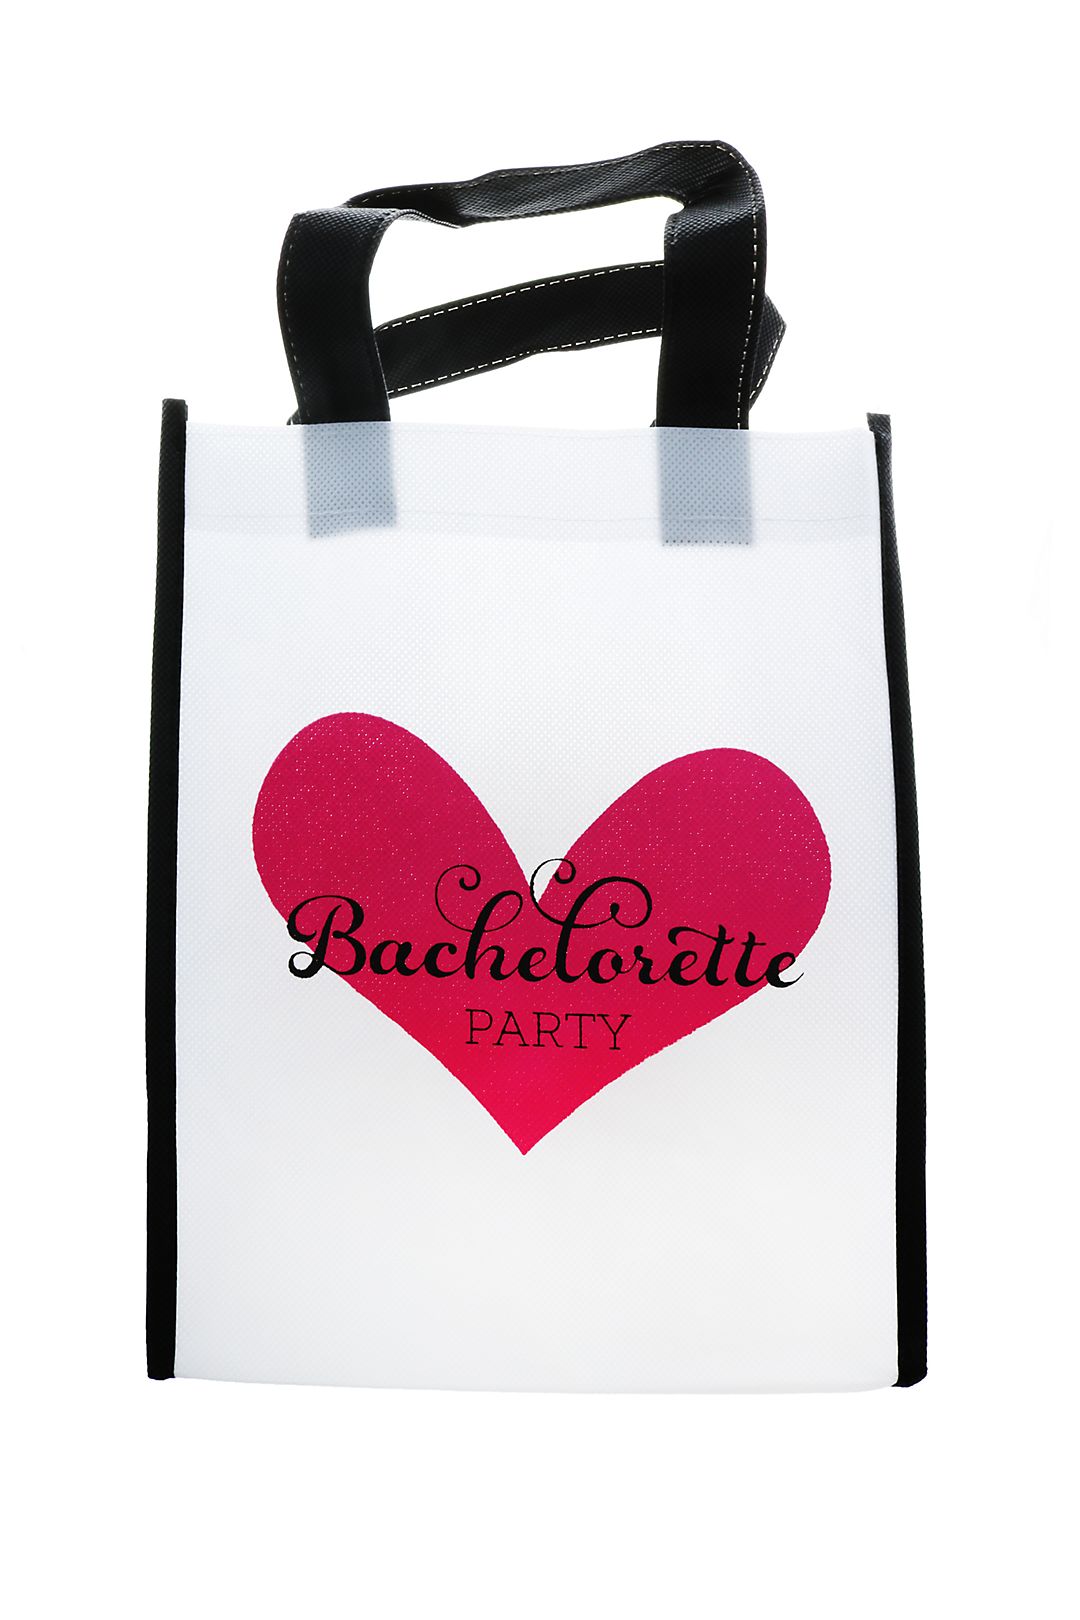 Bachelorette Party Bags Image 1